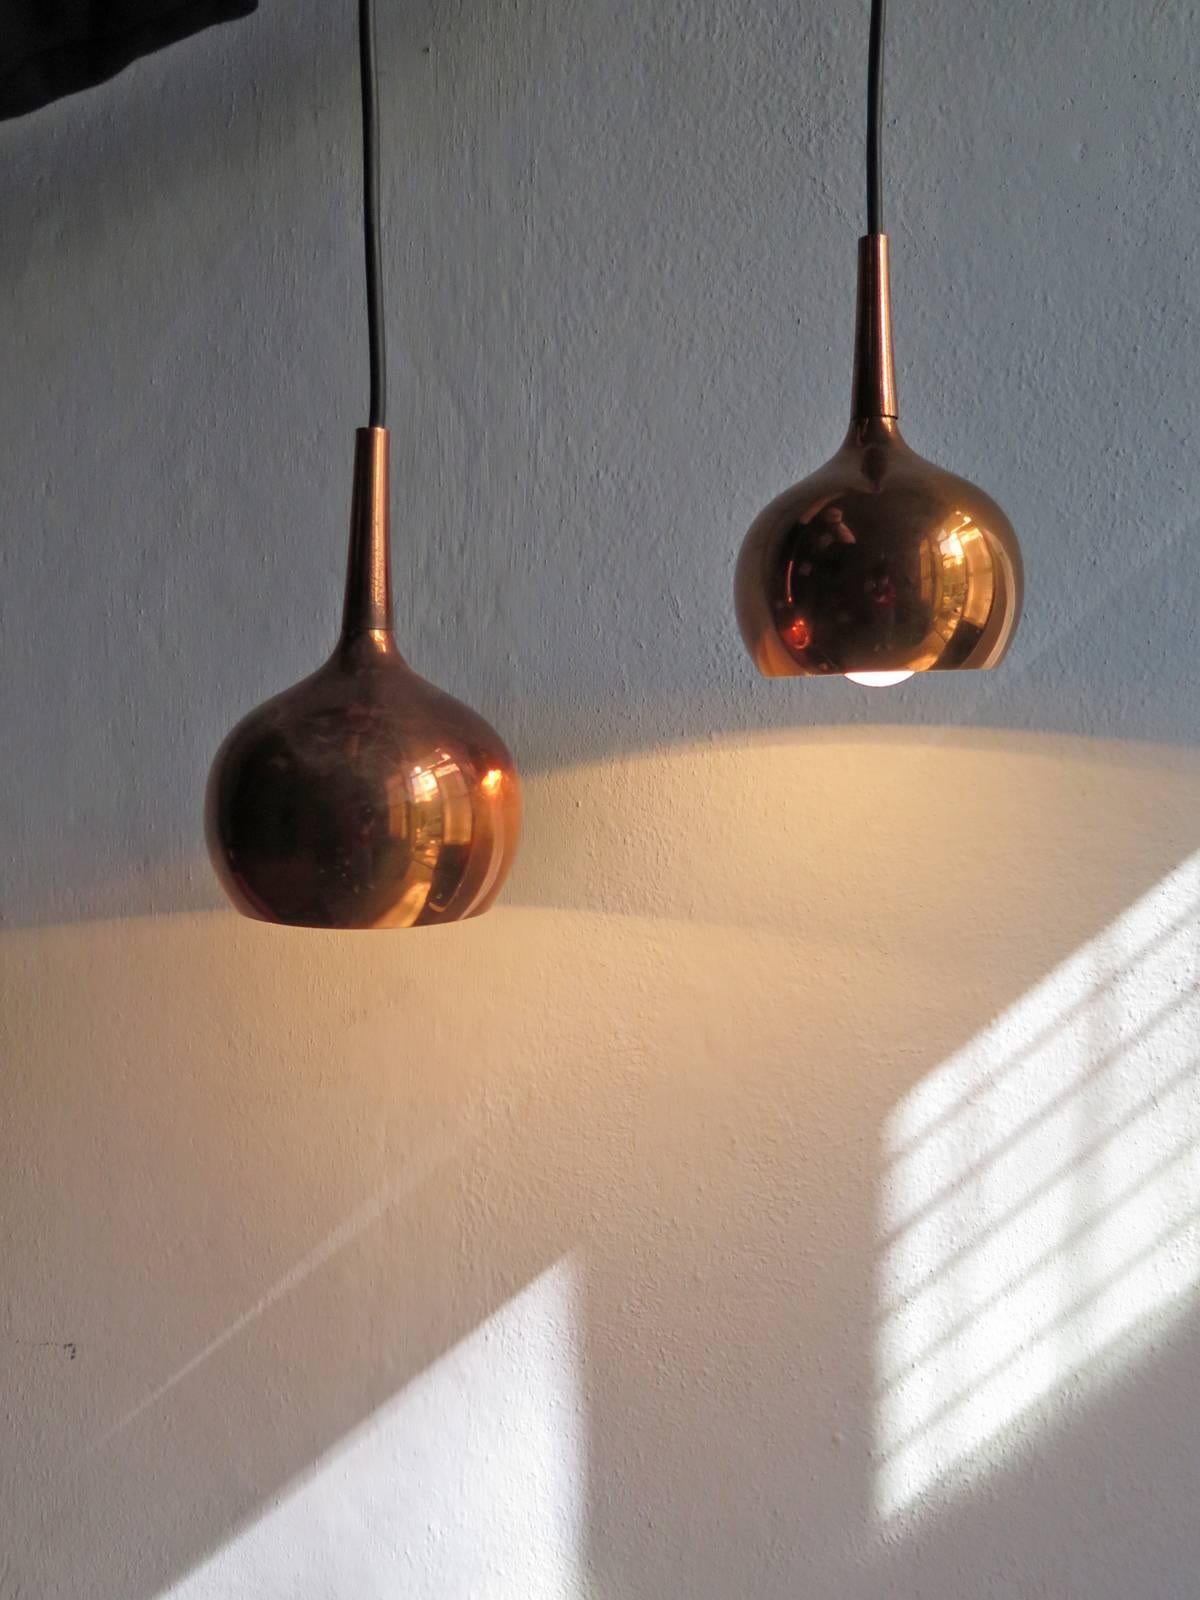 Pair of copper pendant lamps beautifully shaped.